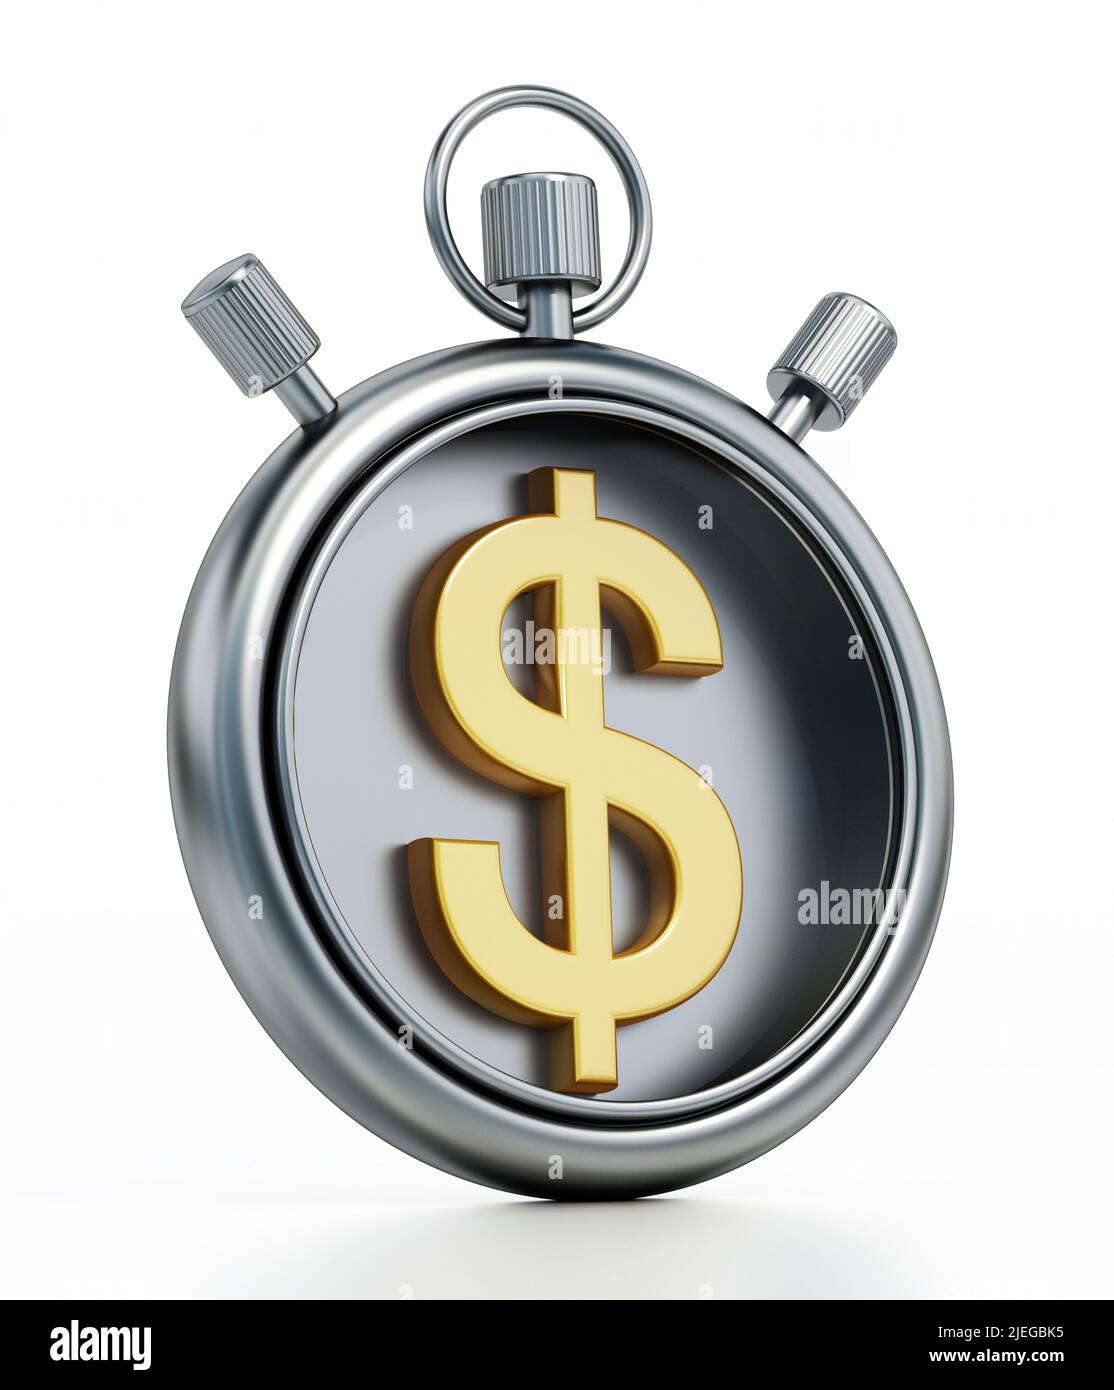 Dollar symbol inside chronometer isolated on white background. 3D illustration. Stock Photo